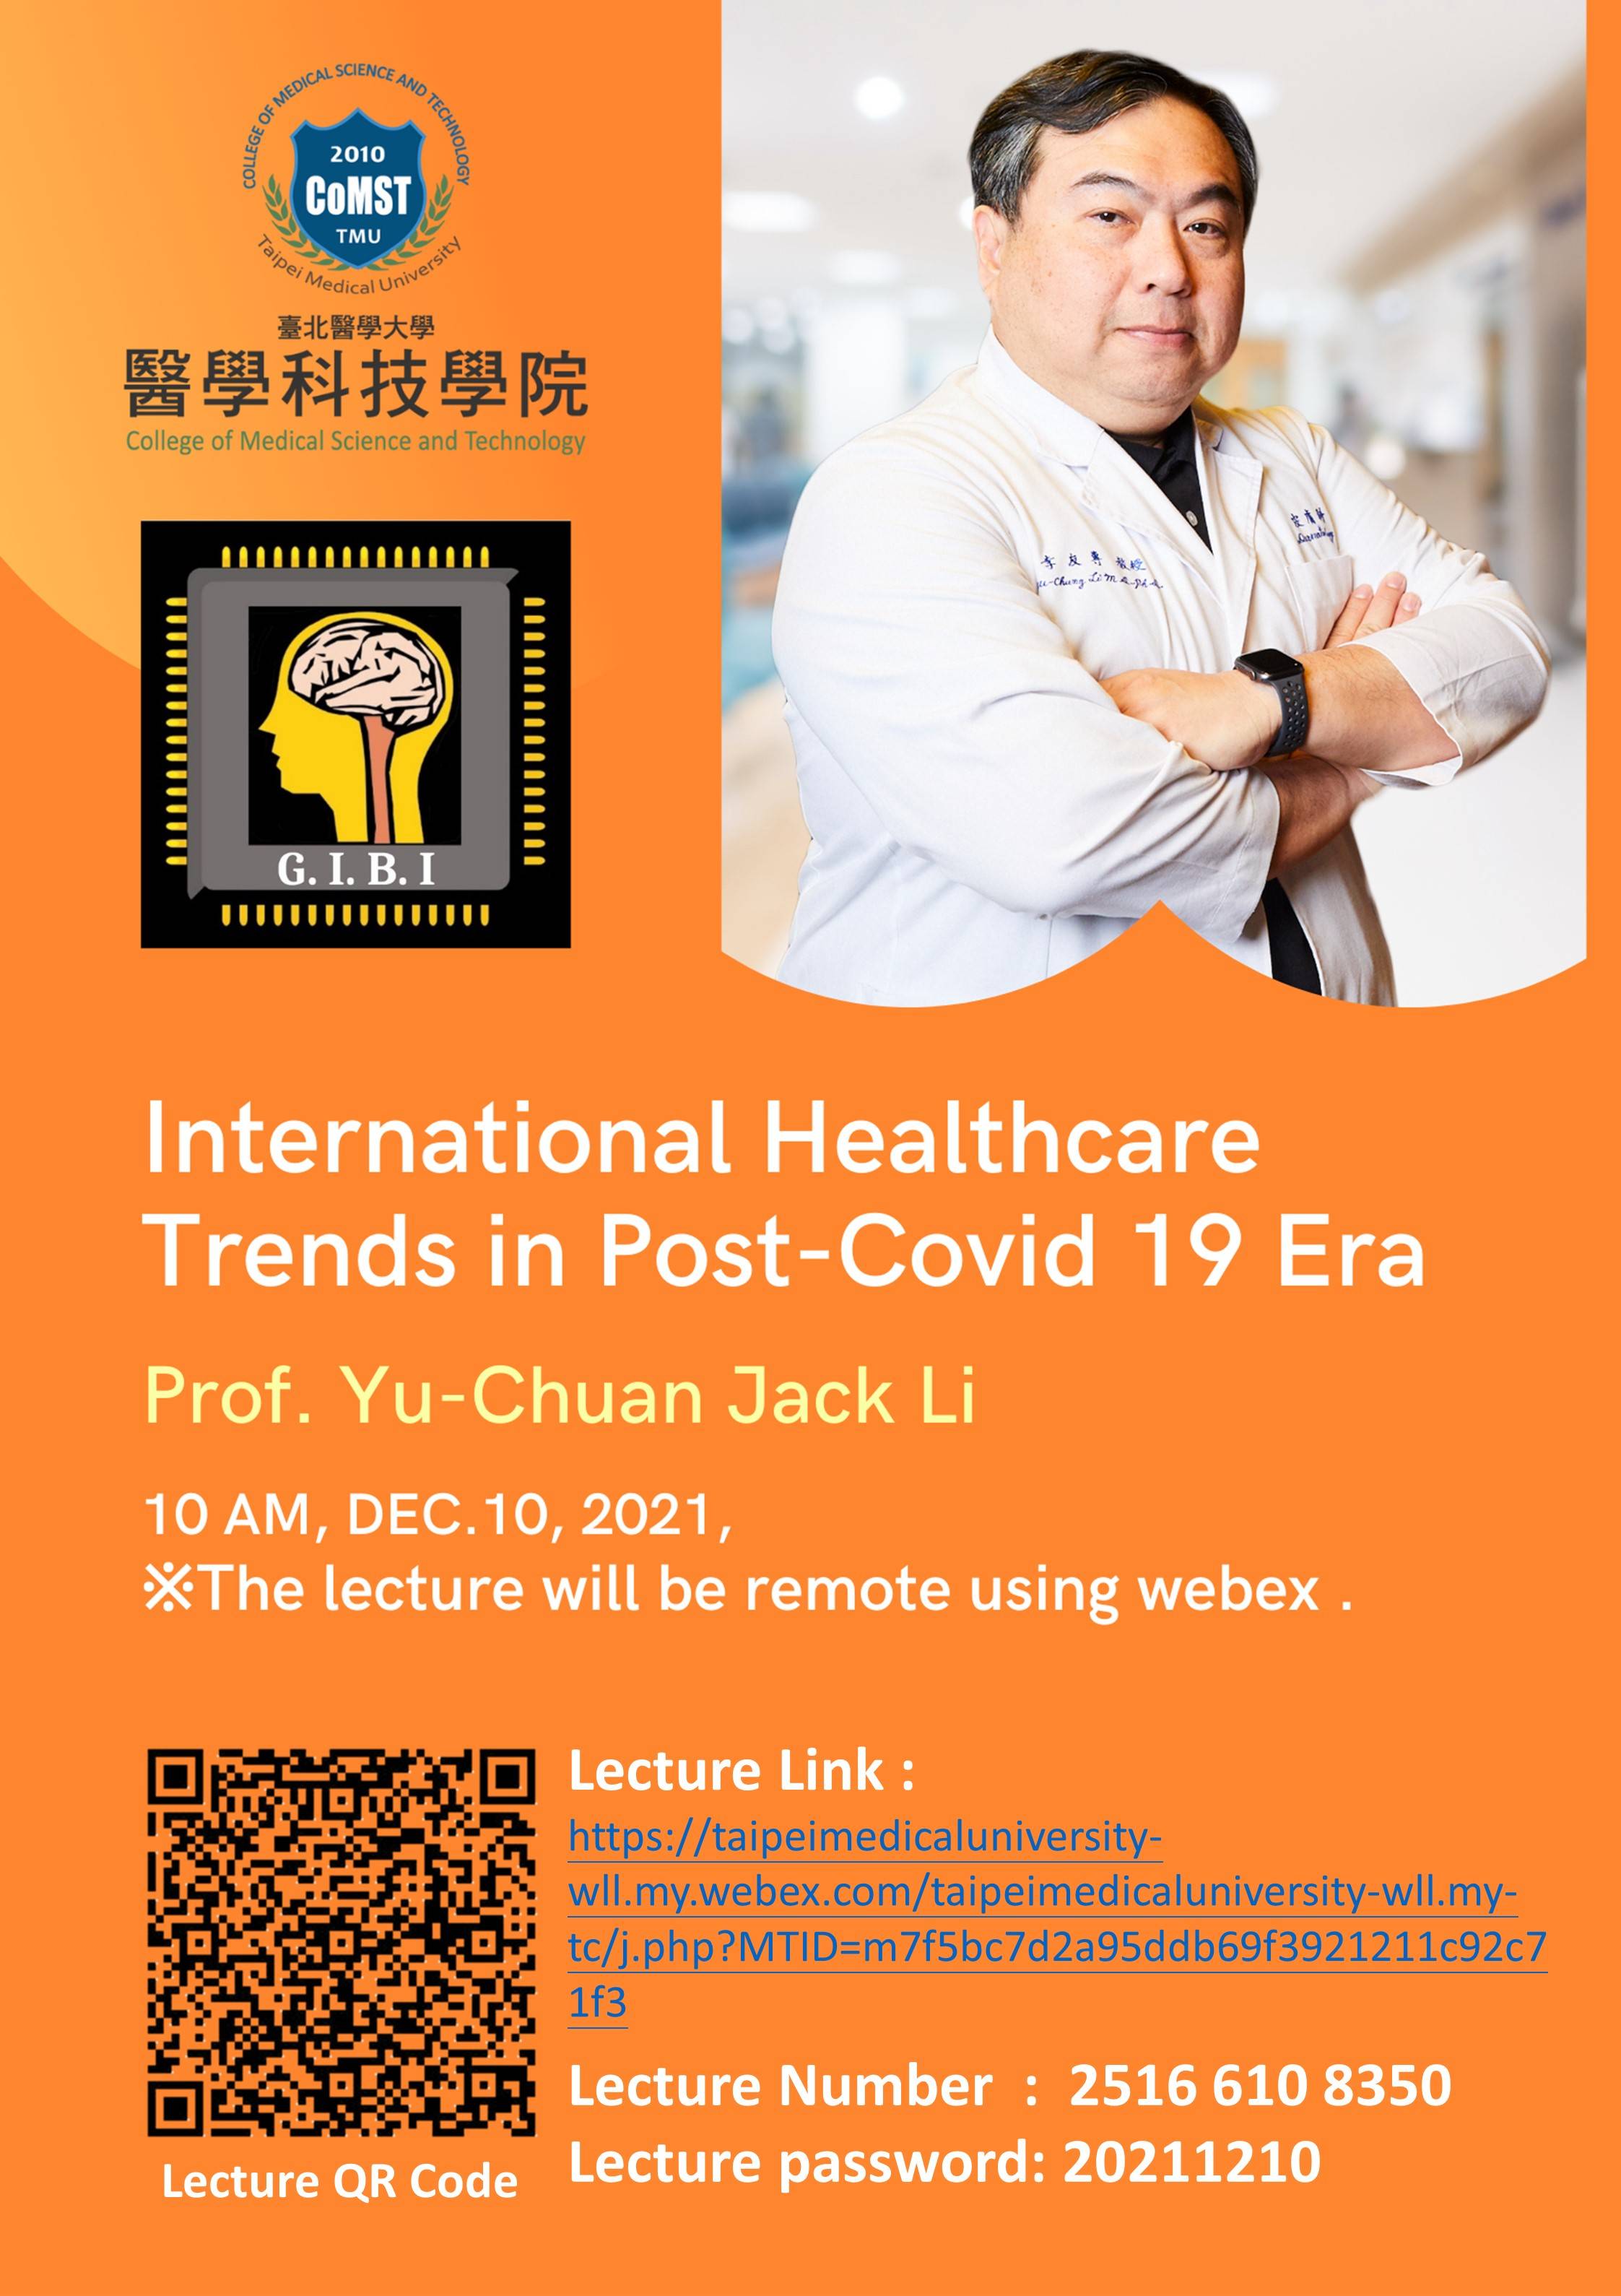 【Special Lecture - Prof. Jack Li】International Healthcare Trends in Post-Covid 19 Era